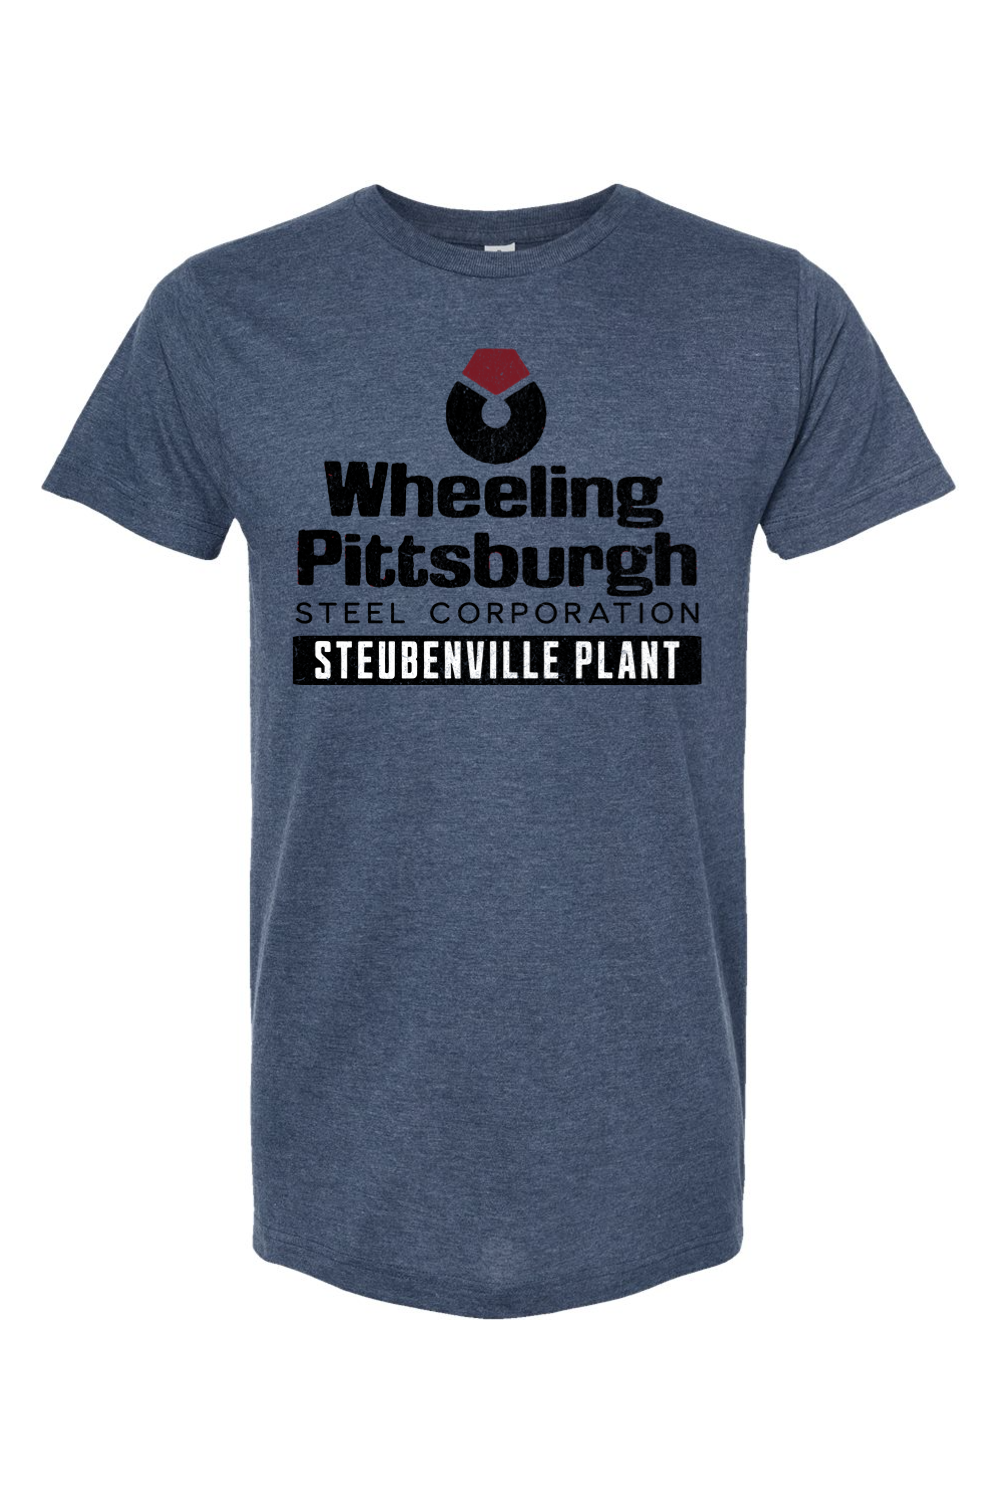 Wheeling Pittsburgh Steel Corp - Steubenville Plant - Yinzylvania